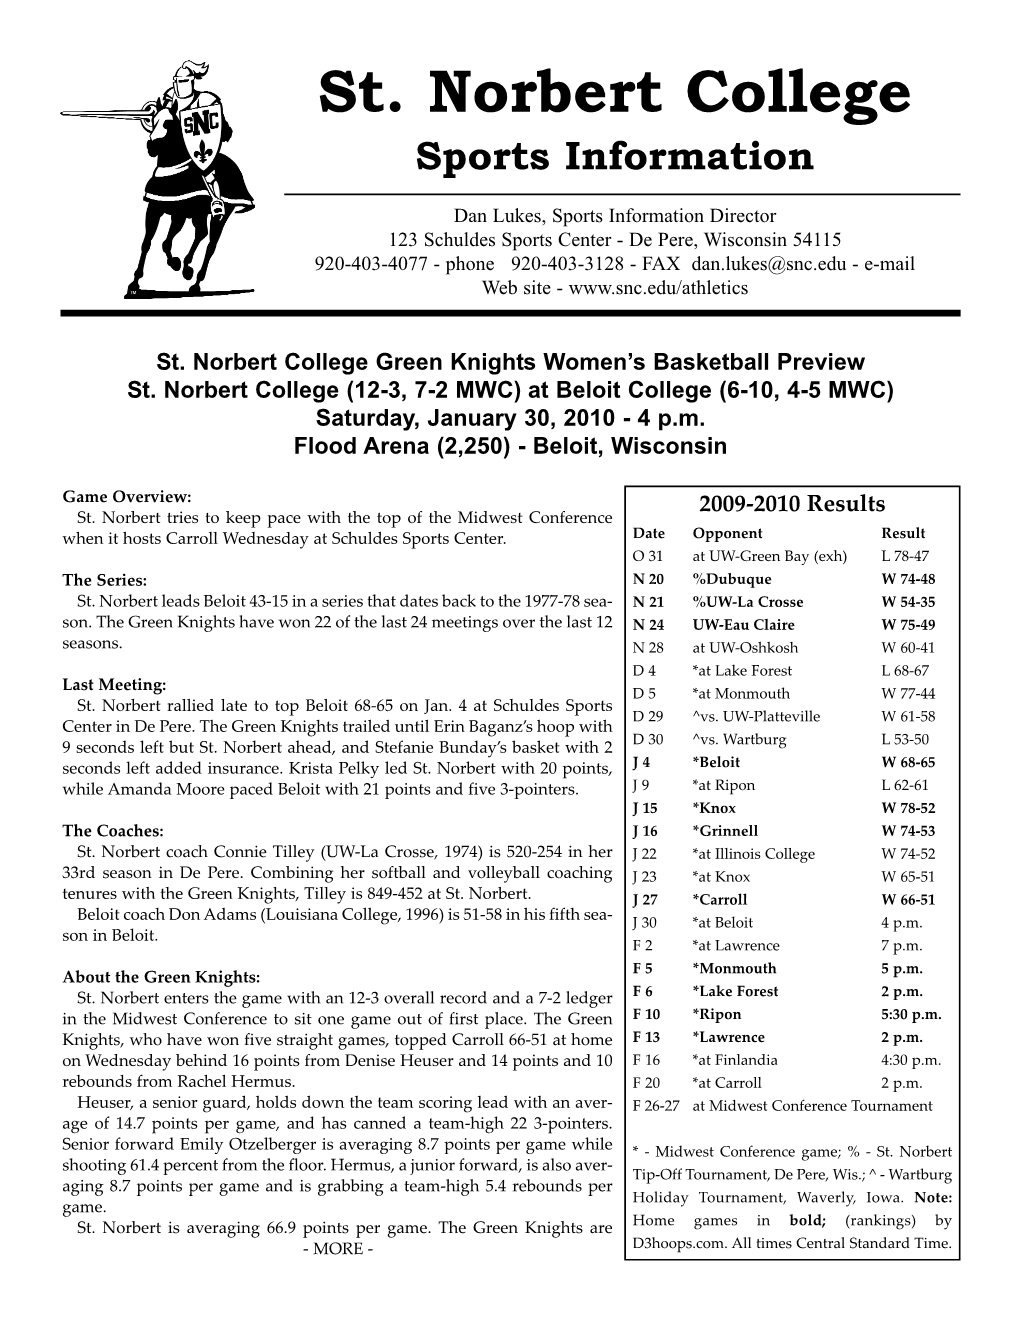 St. Norbert College Sports Information